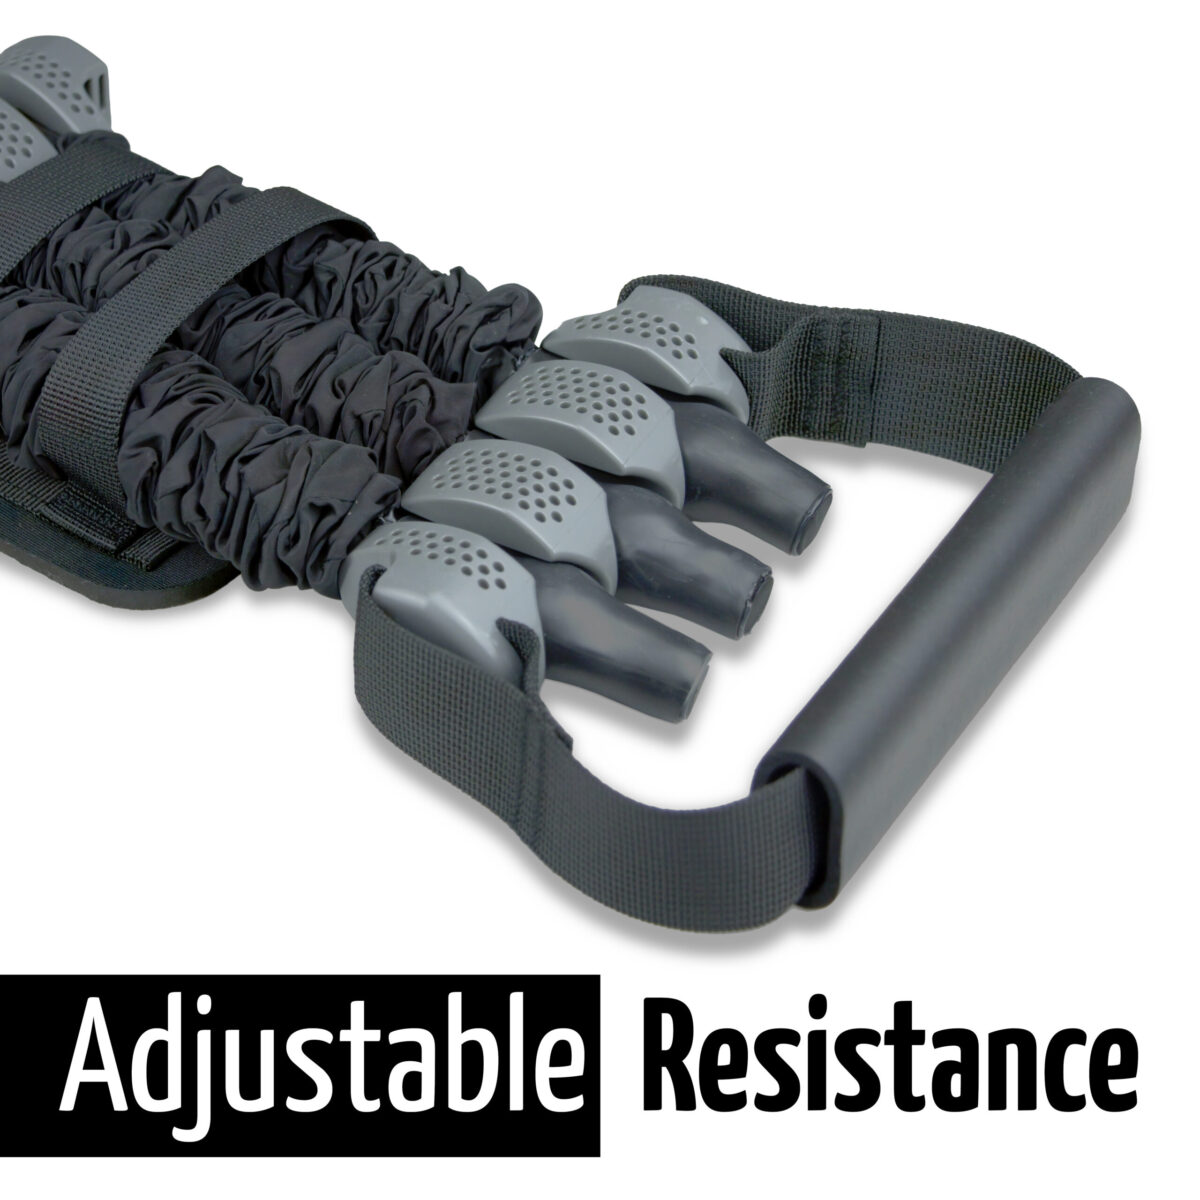 Adjustable Resistance 1 Edit